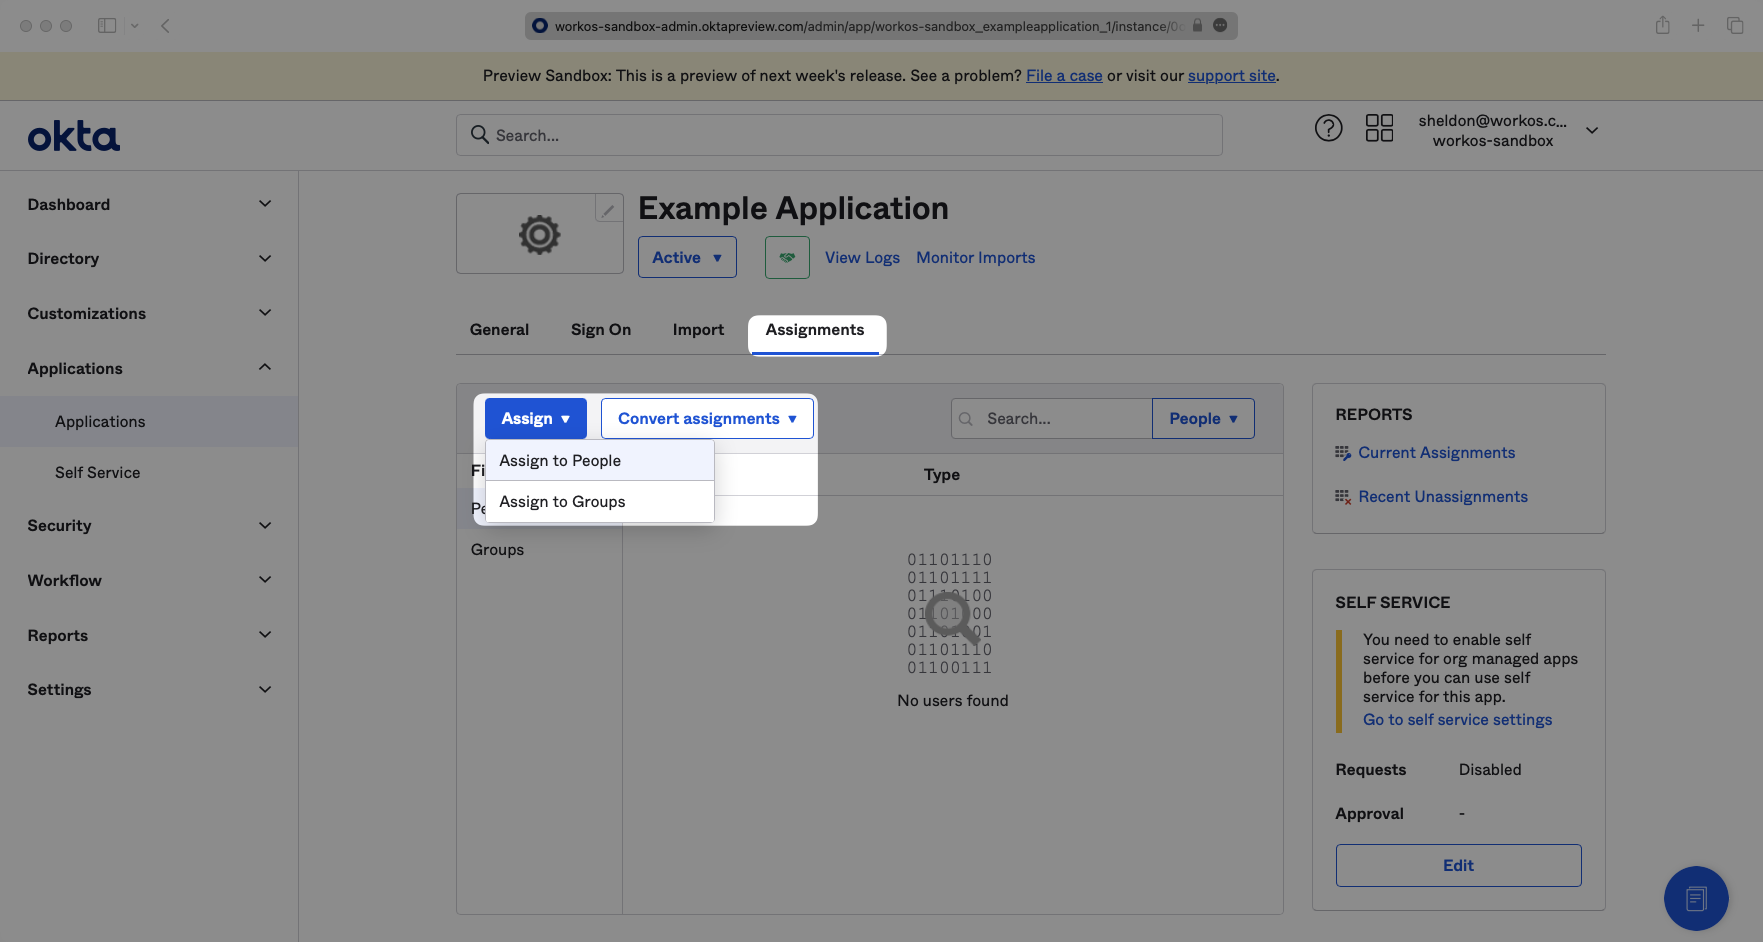 A screenshot showing the Okta Application "Assignments" tab in the Okta Dashboard.